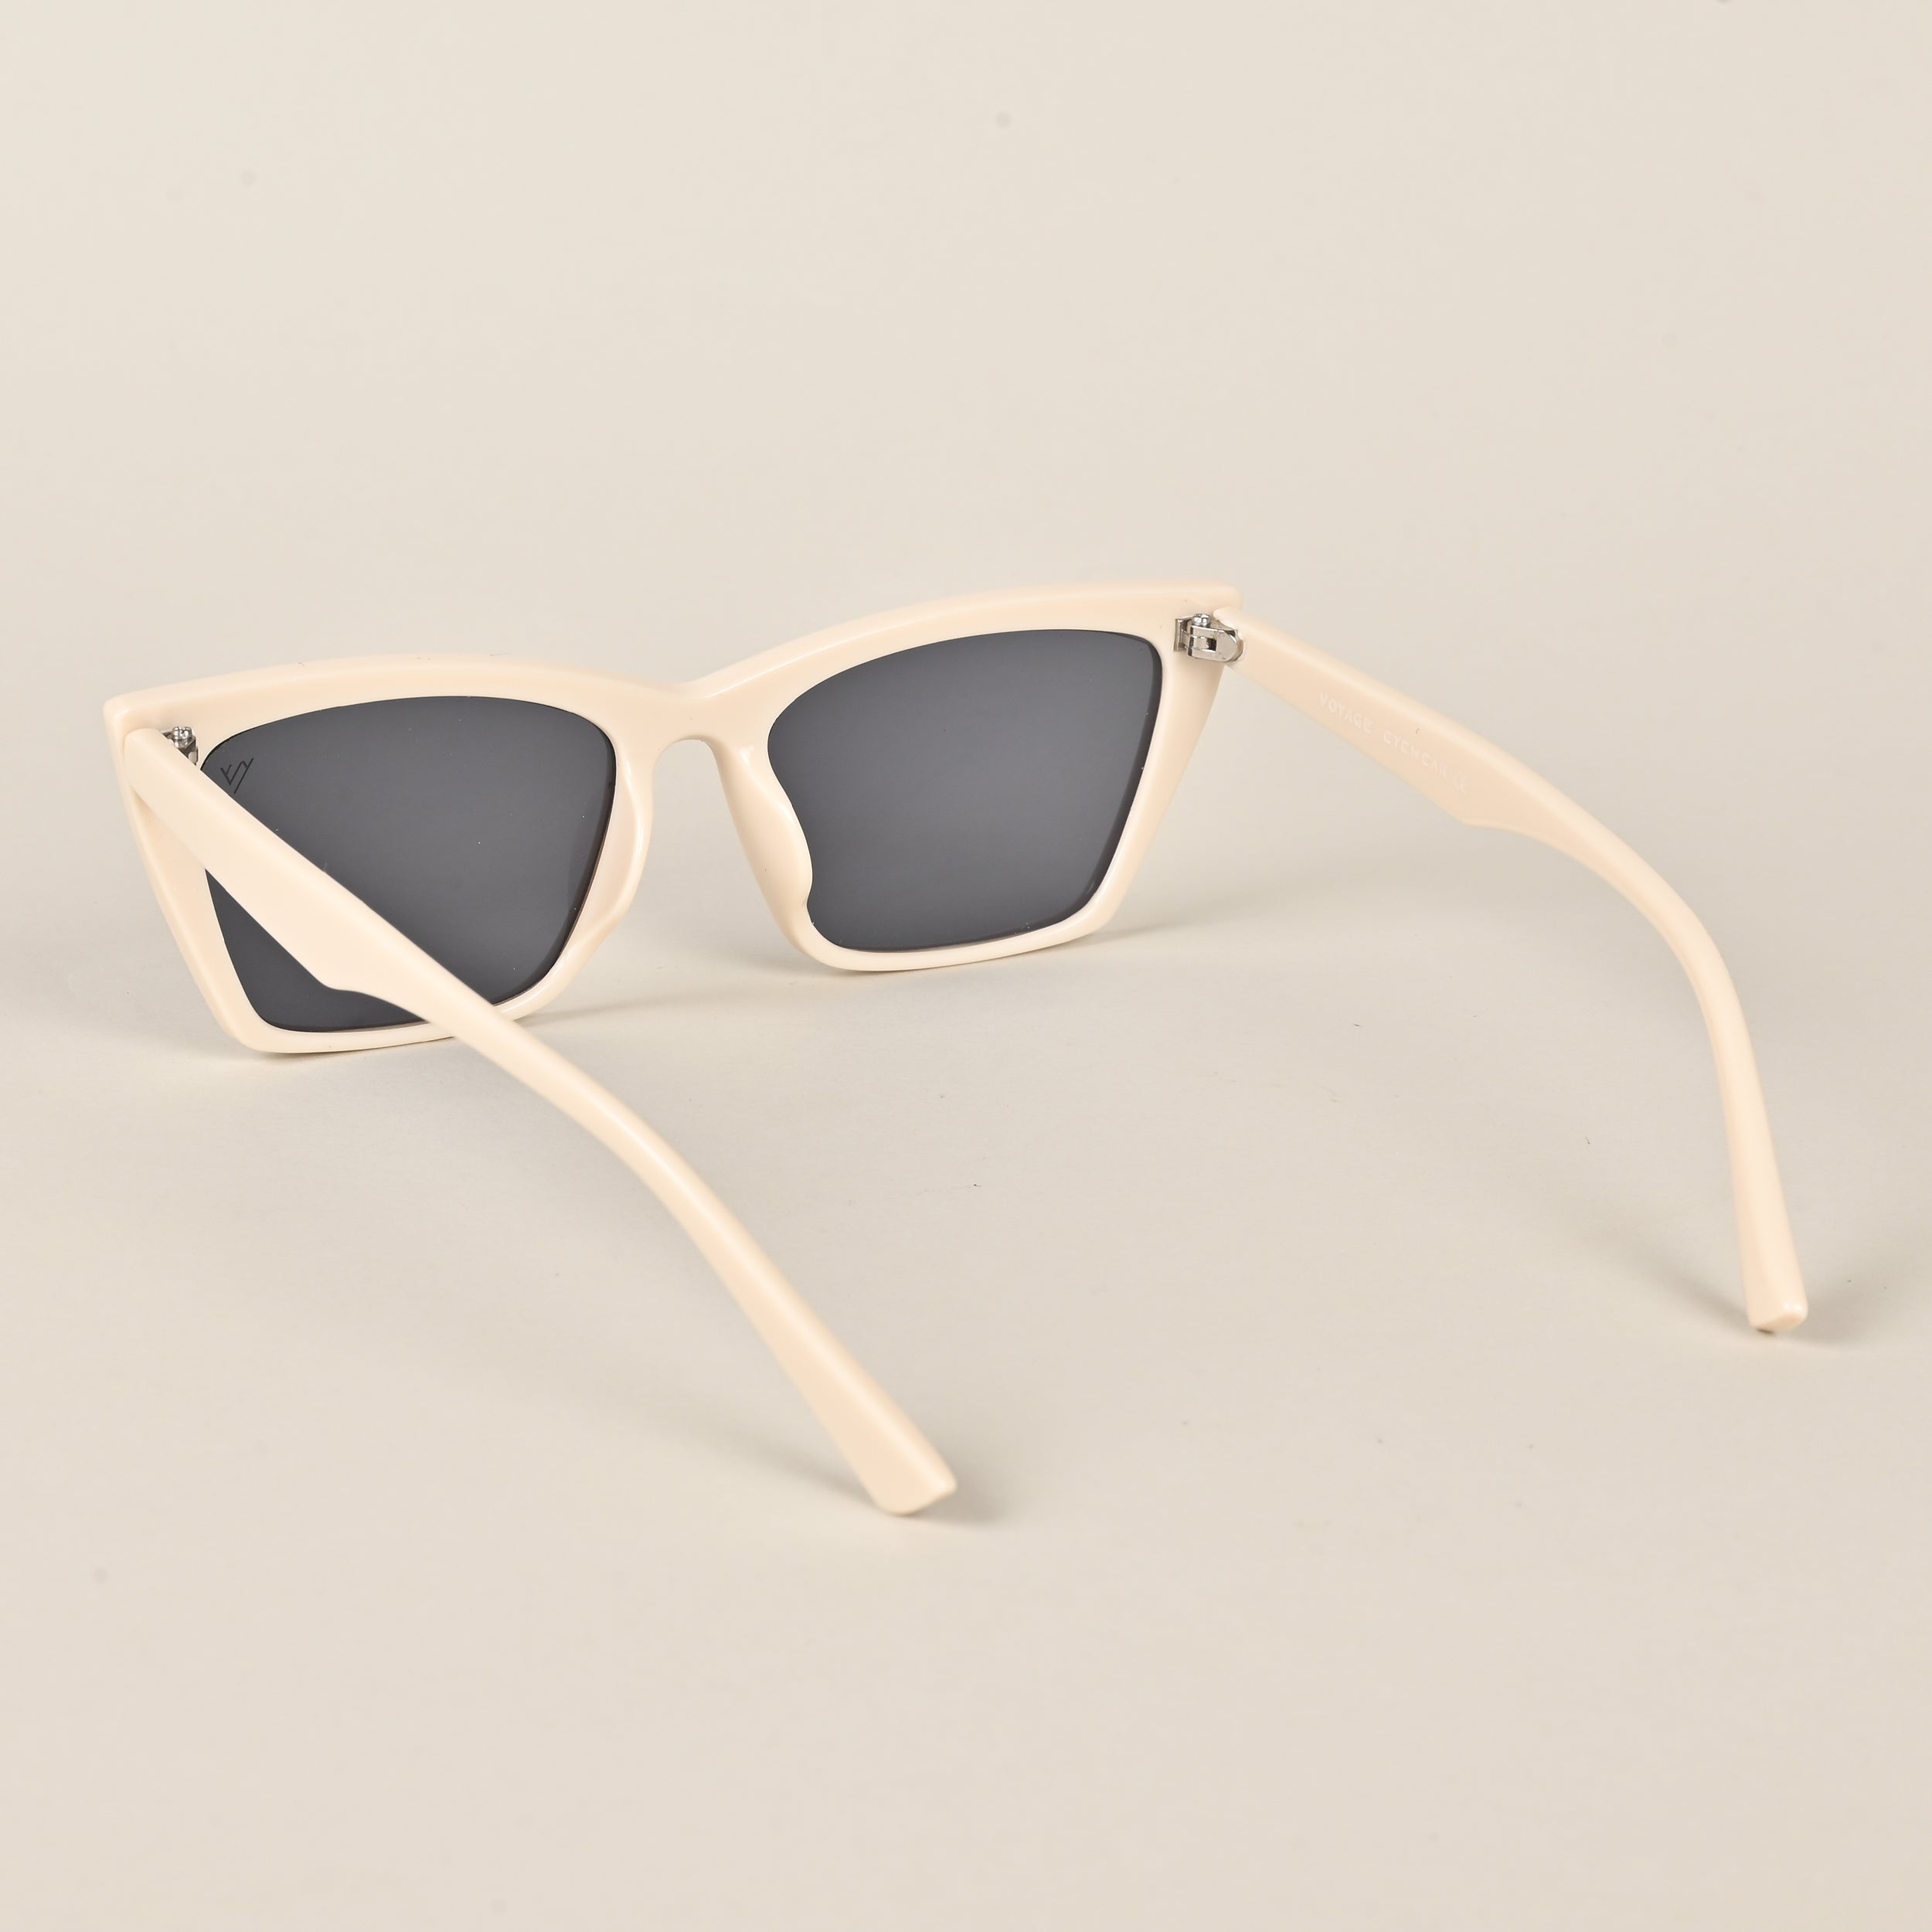 Voyage Black Cateye Sunglasses for Women (2048MG3991)